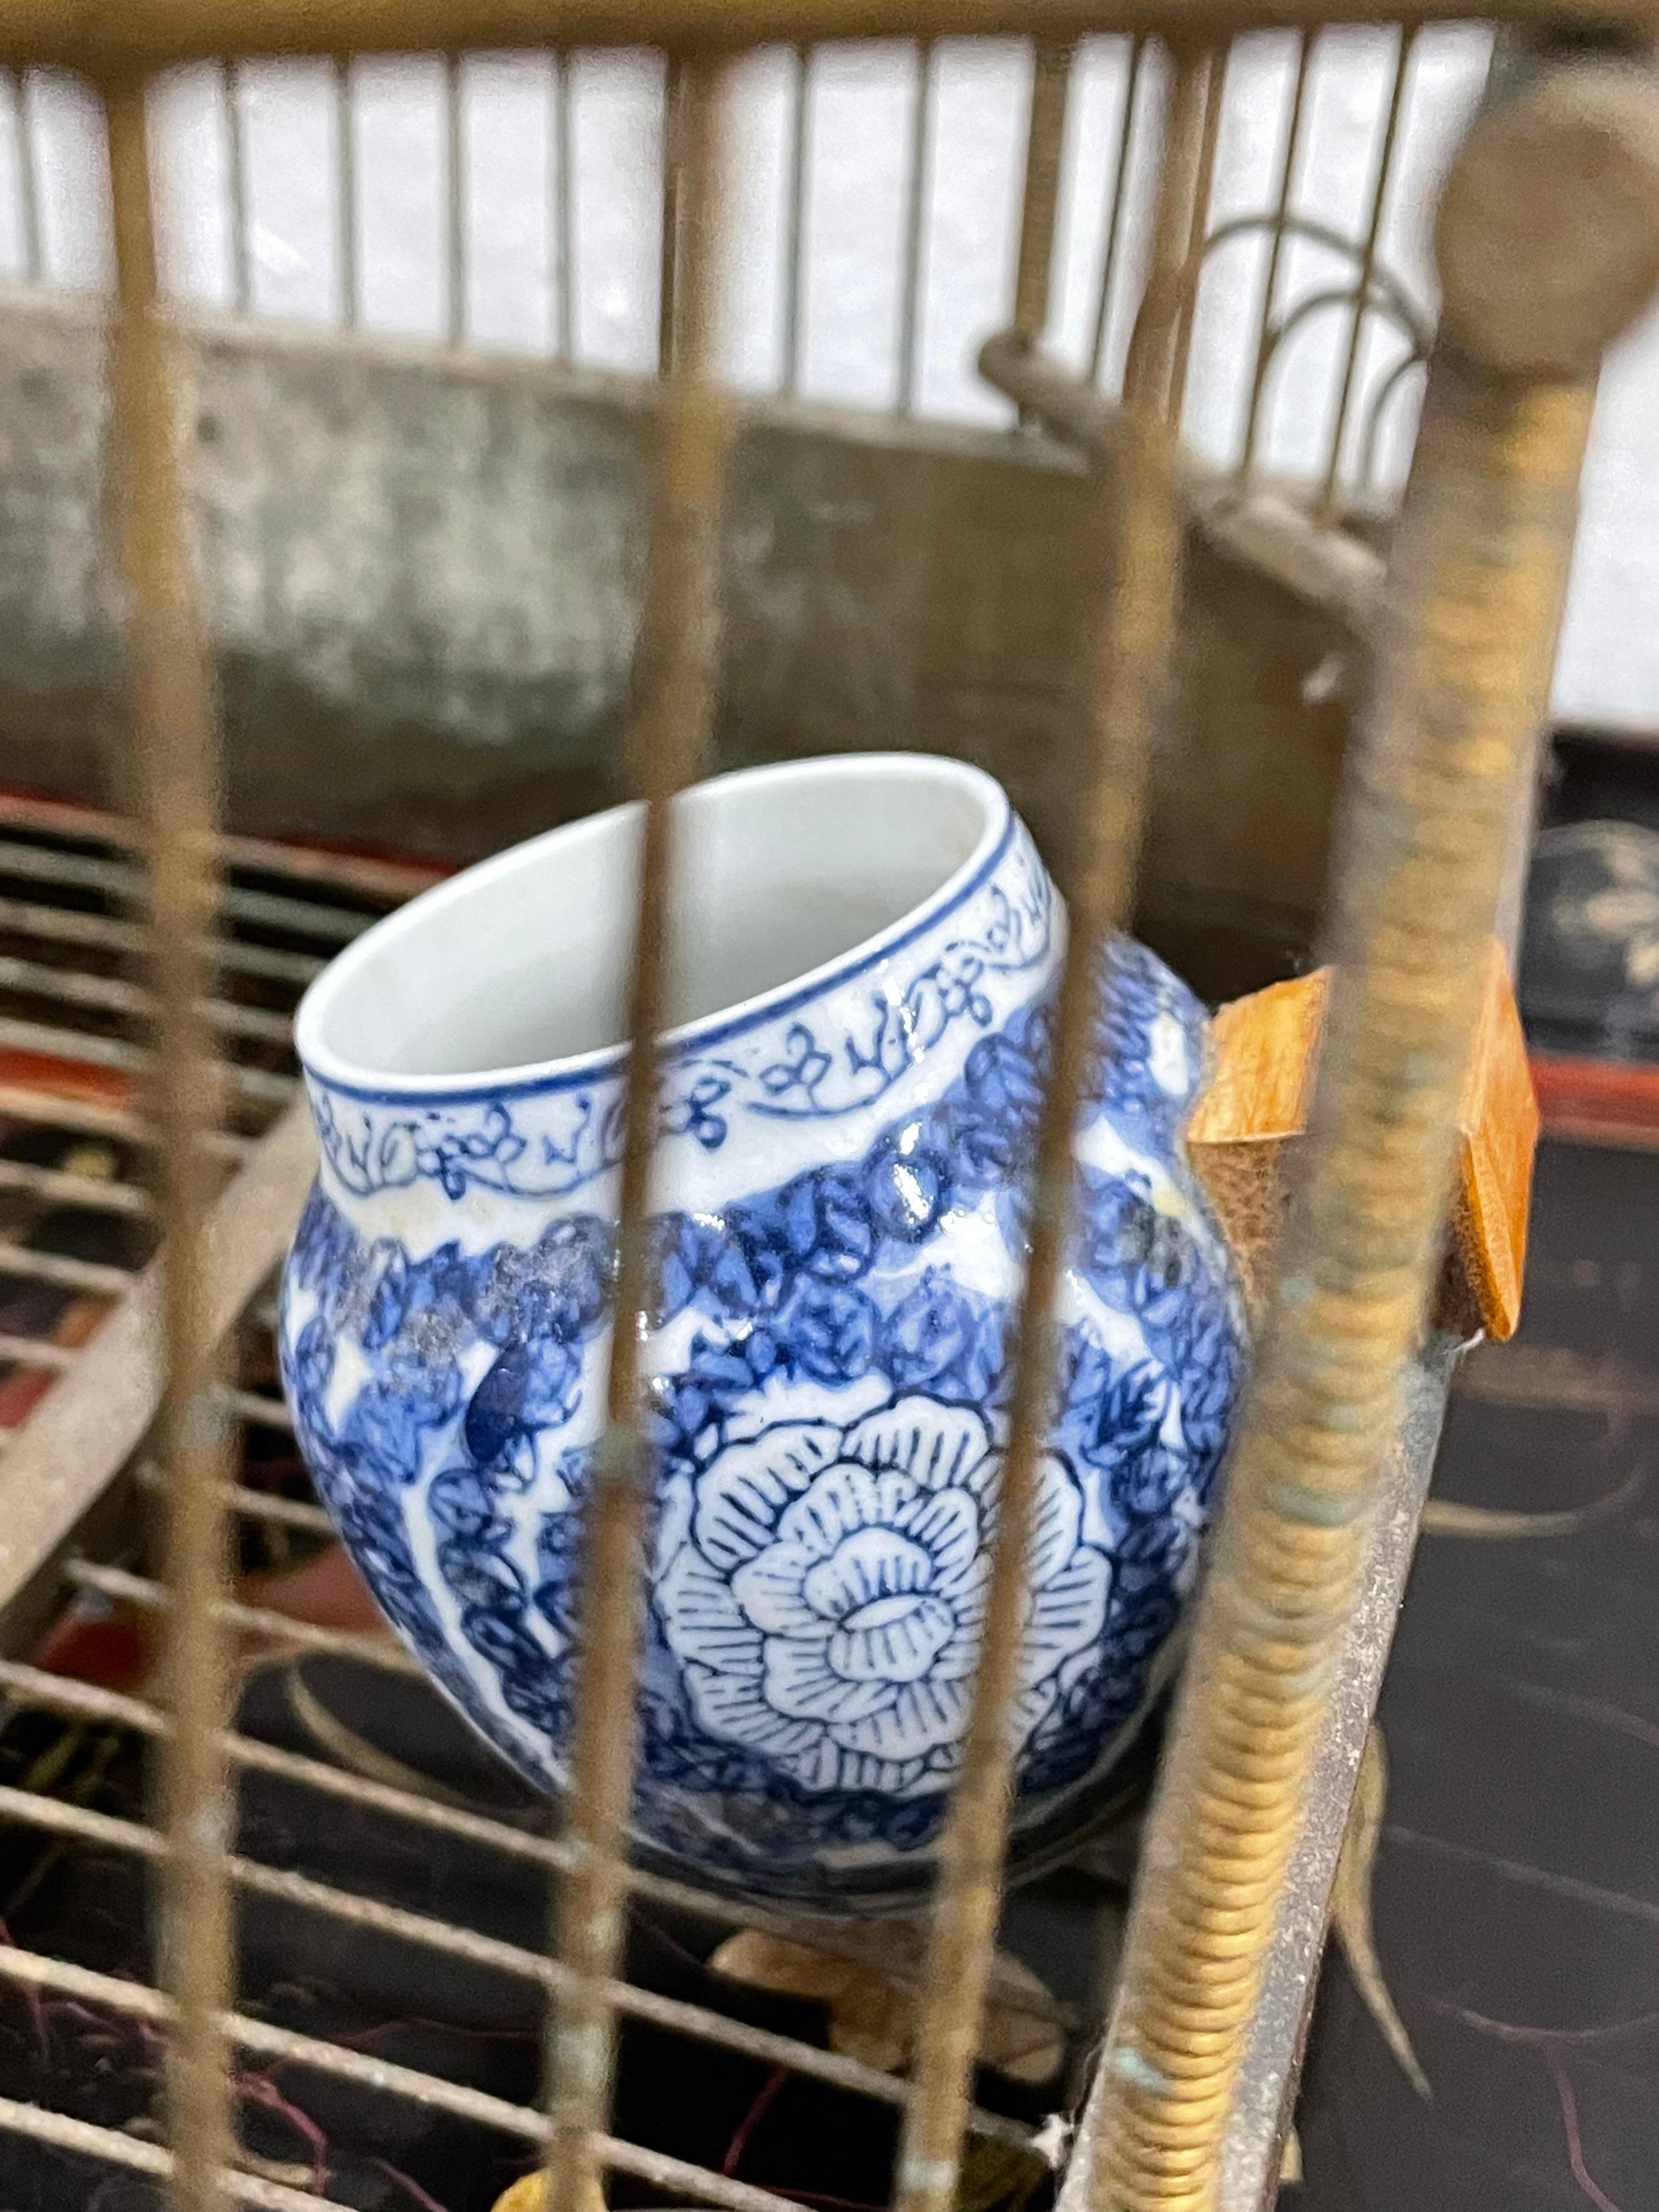 C. 20th century

Vintage birdcage w/ blue & white porcelain feeders.